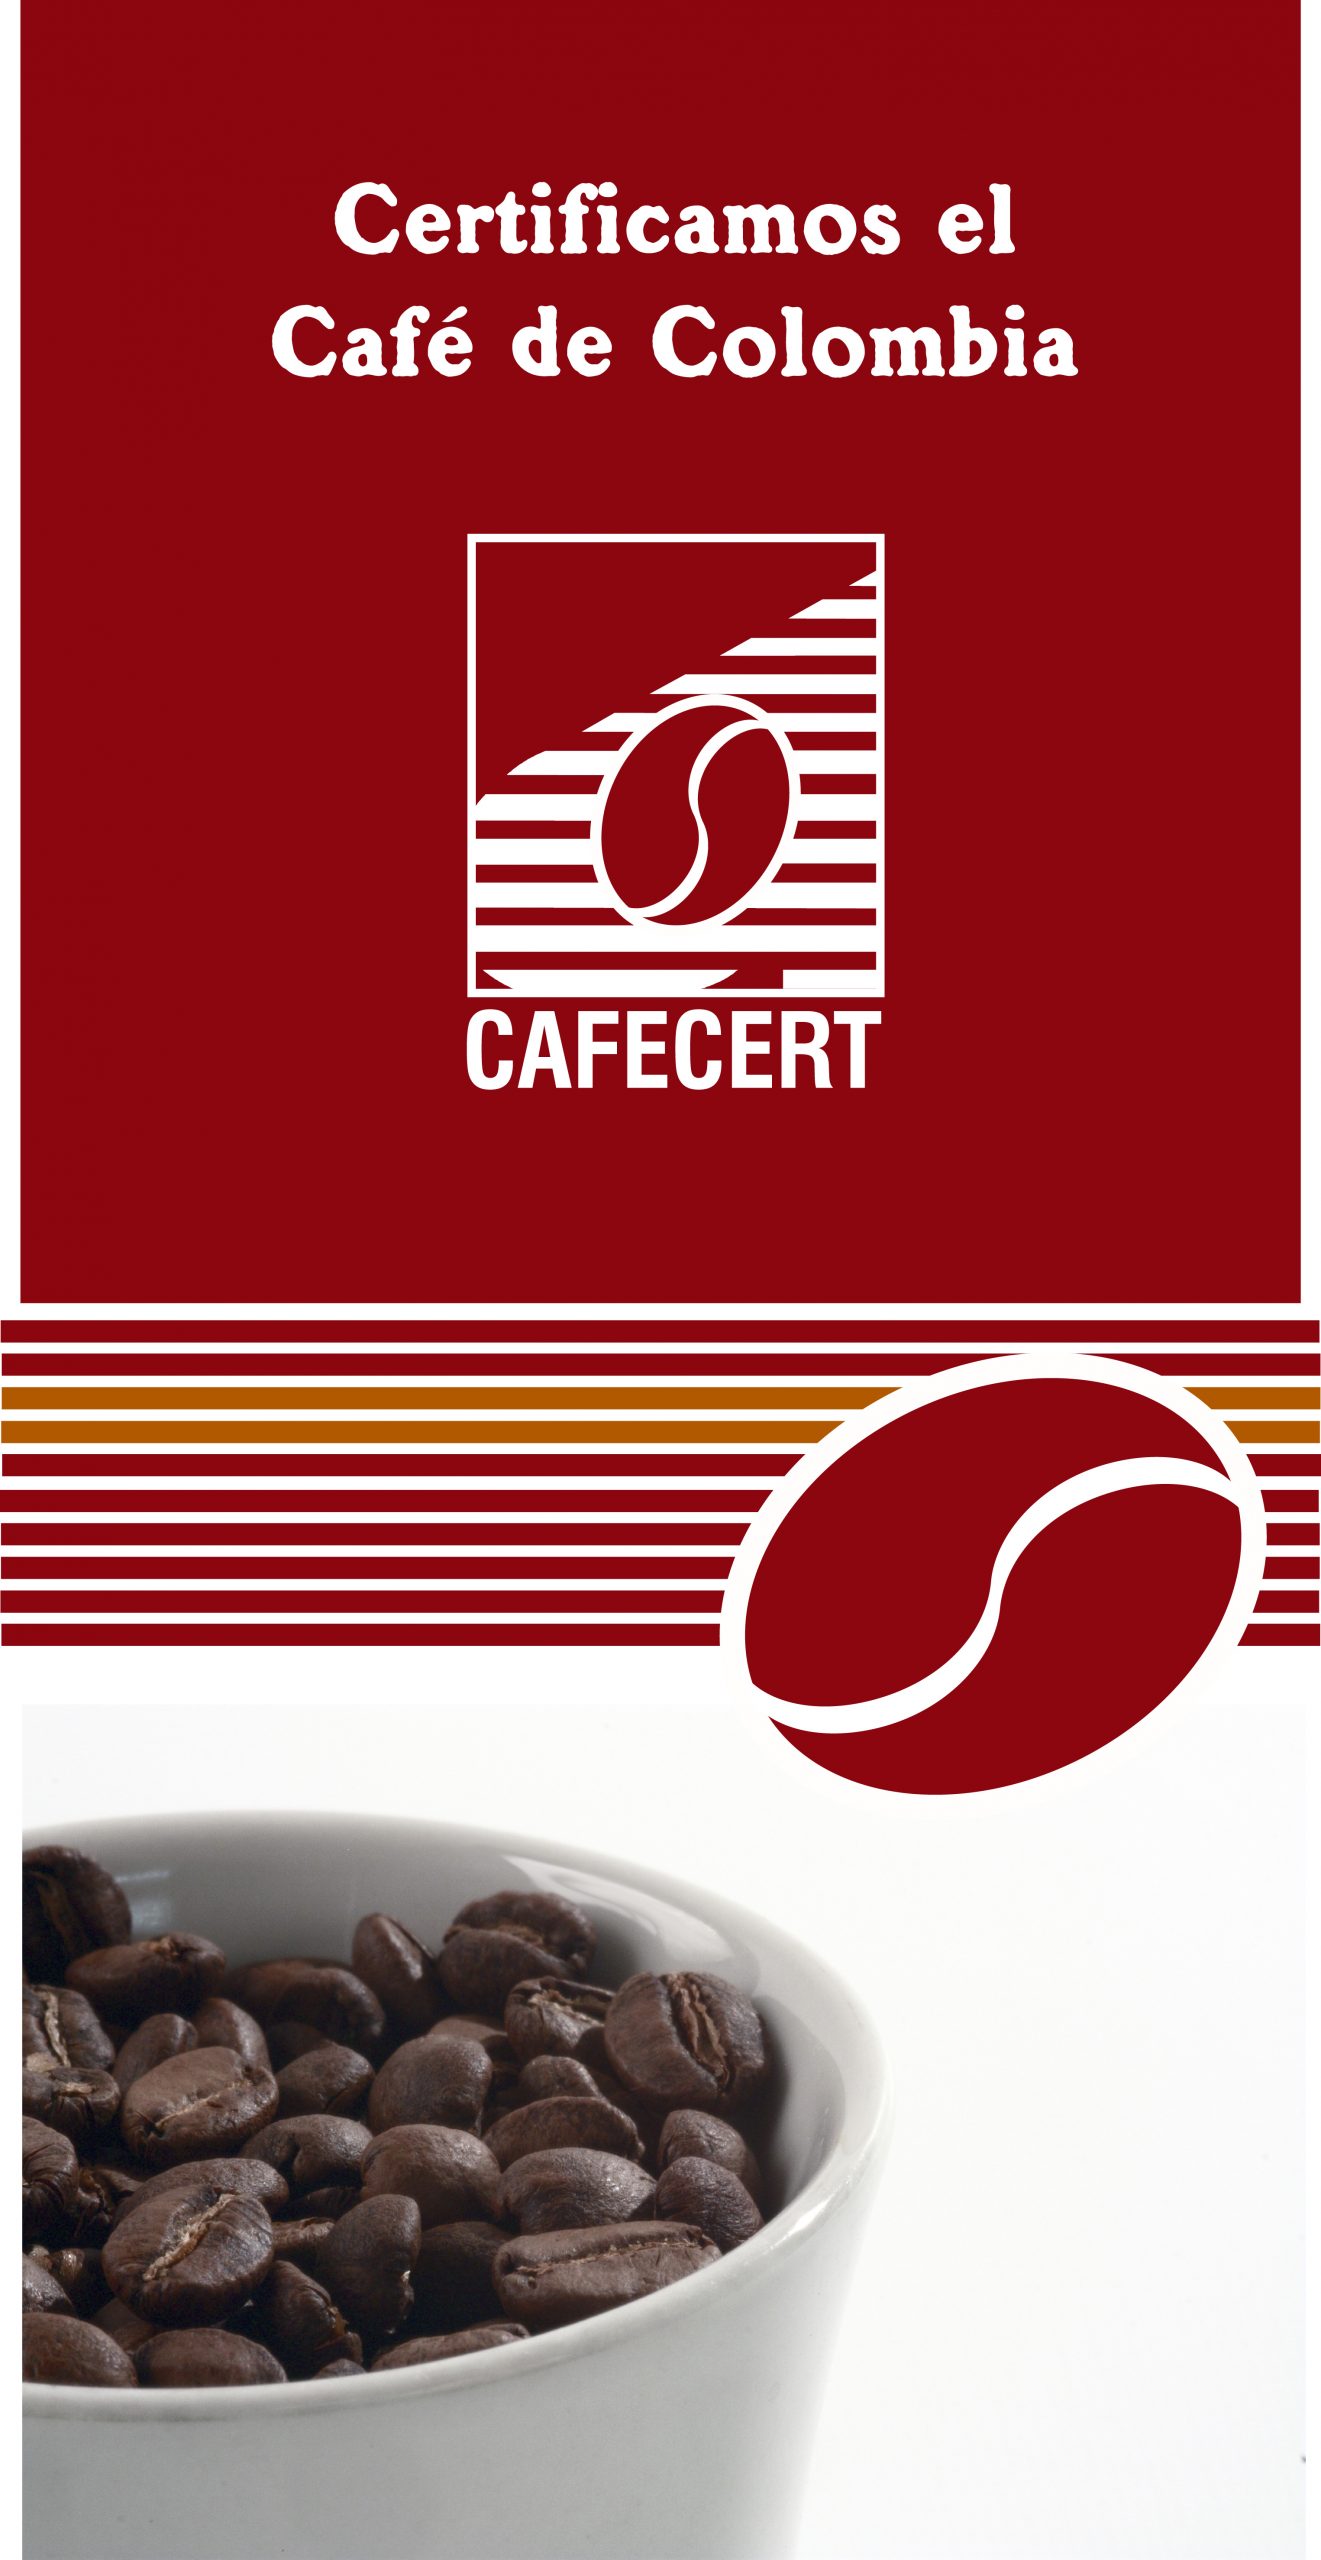 Cafecert